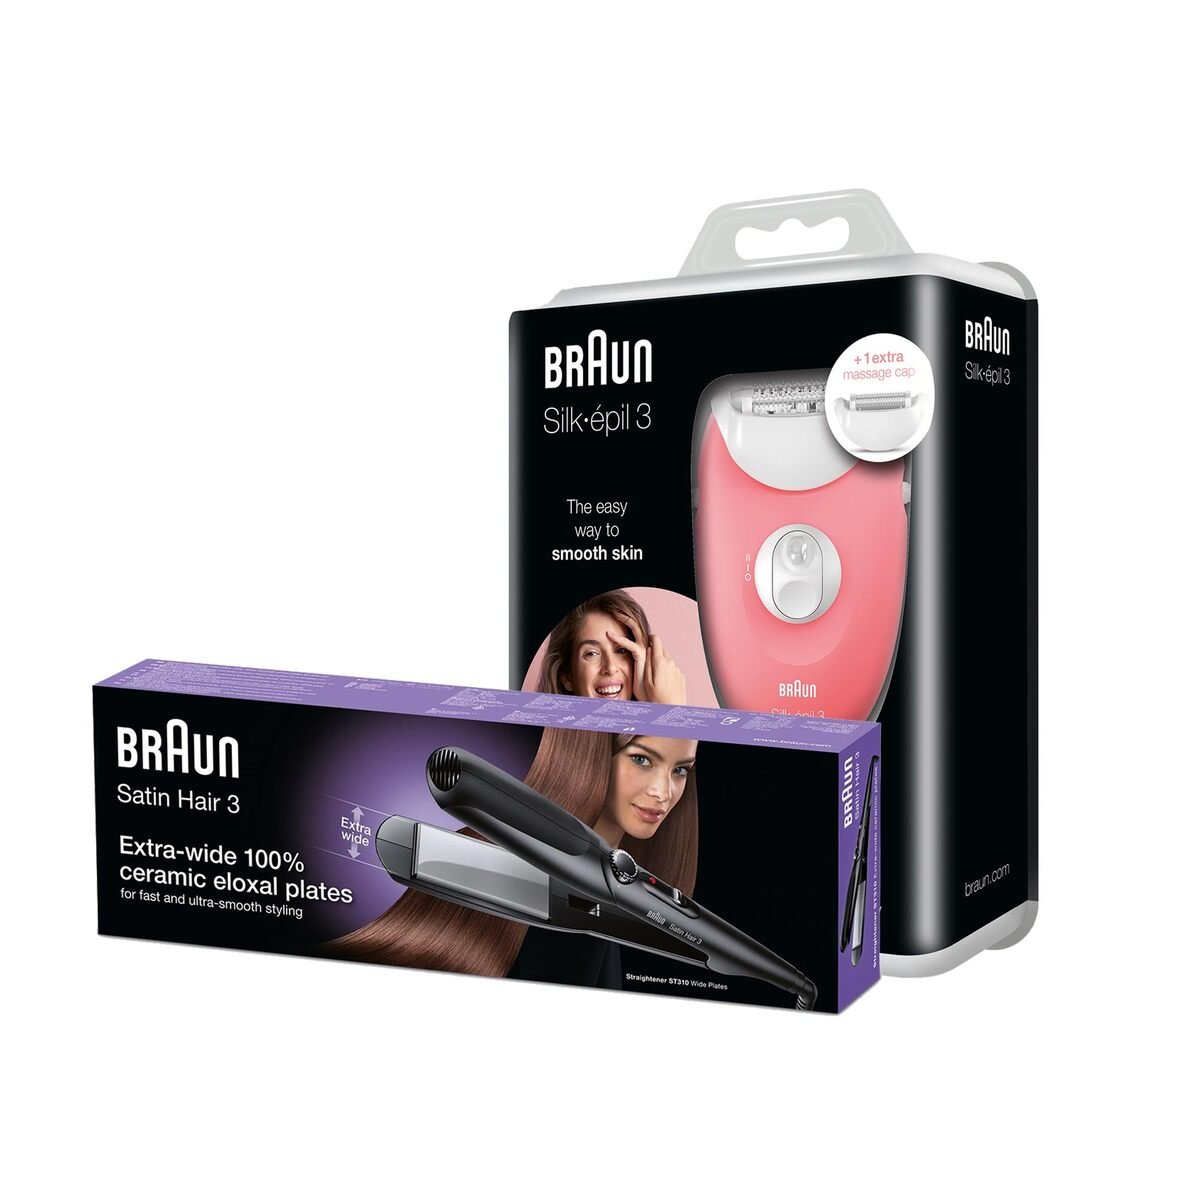 Braun Satin Hair 3 ST310 straightener + Braun Silk-epil 3-430 epilator